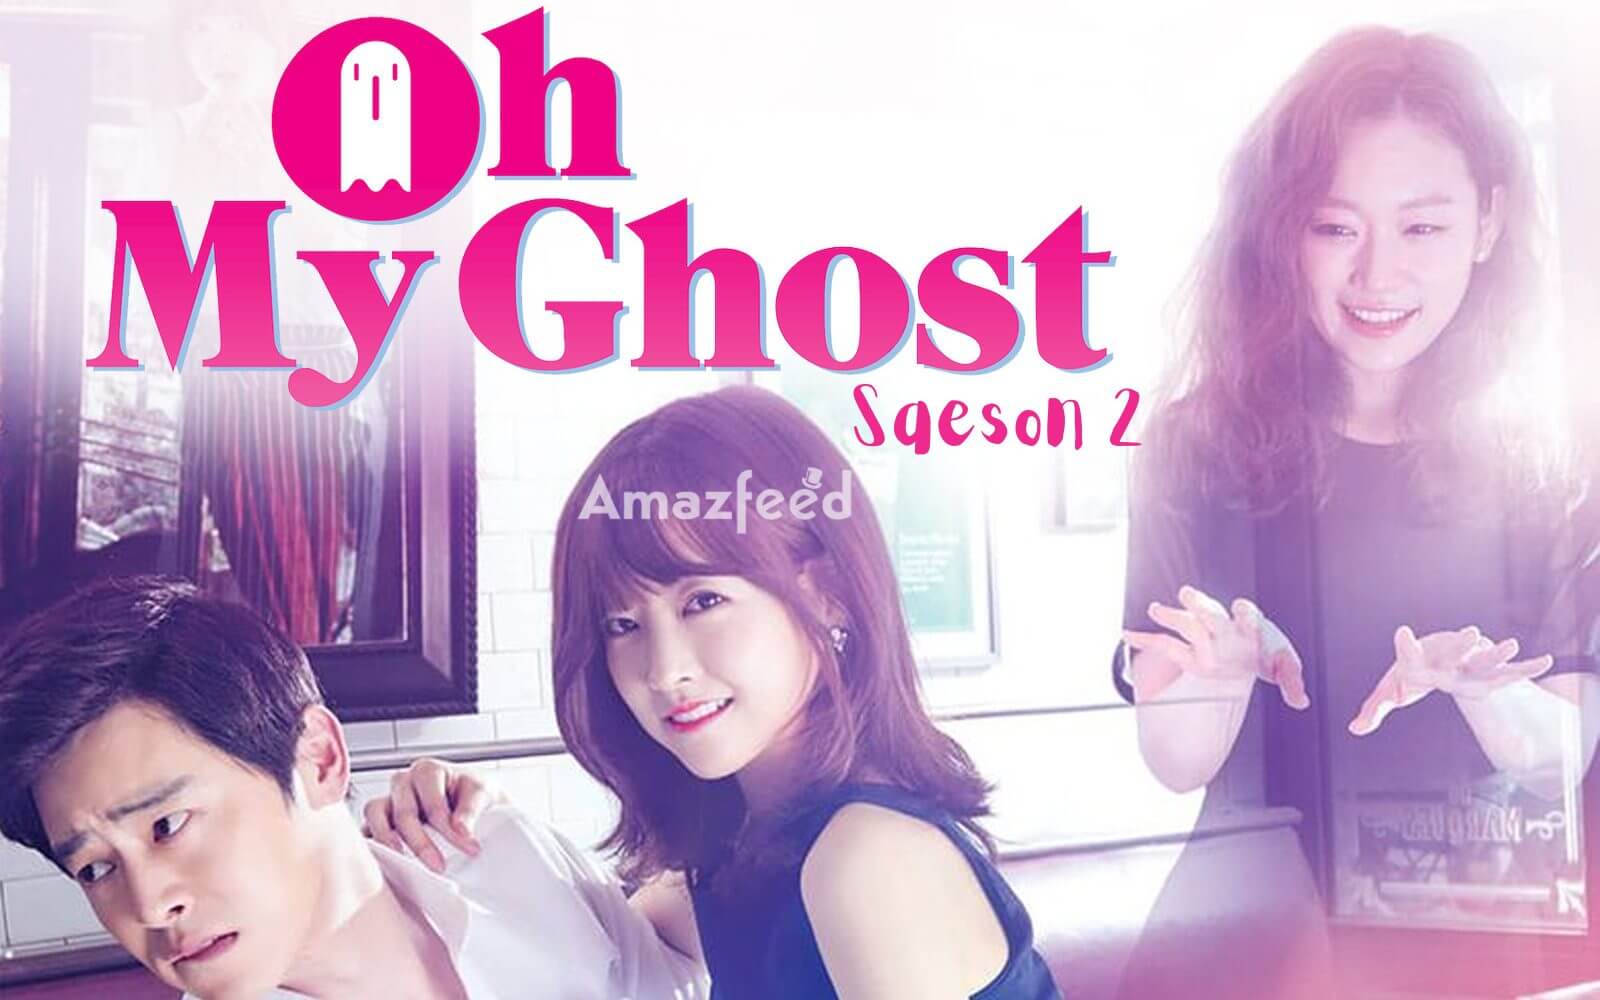 Oh My Ghost Season 2 release date